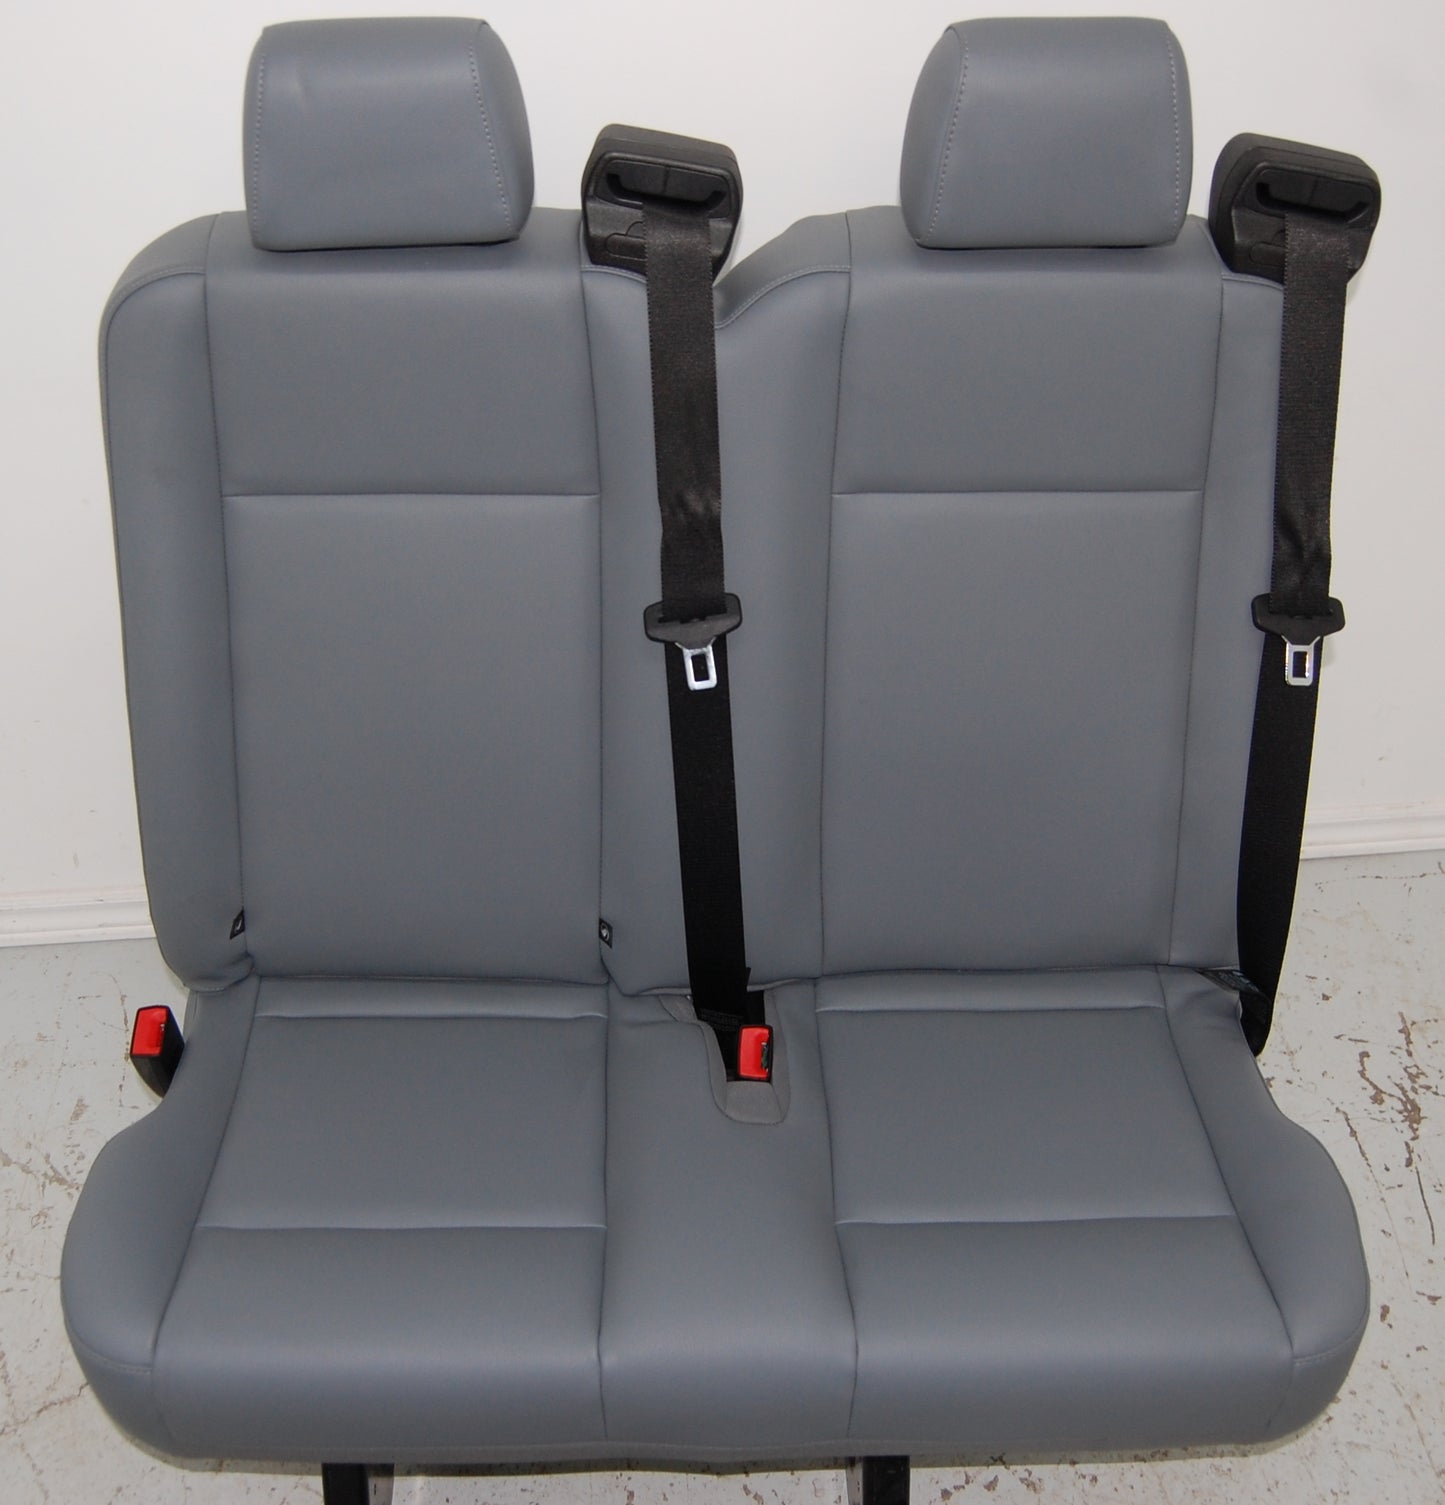 Ford Transit Passenger Van 2018 Grey Vinyl 2 Seater 36 inch Left Double Bench Jump Seat